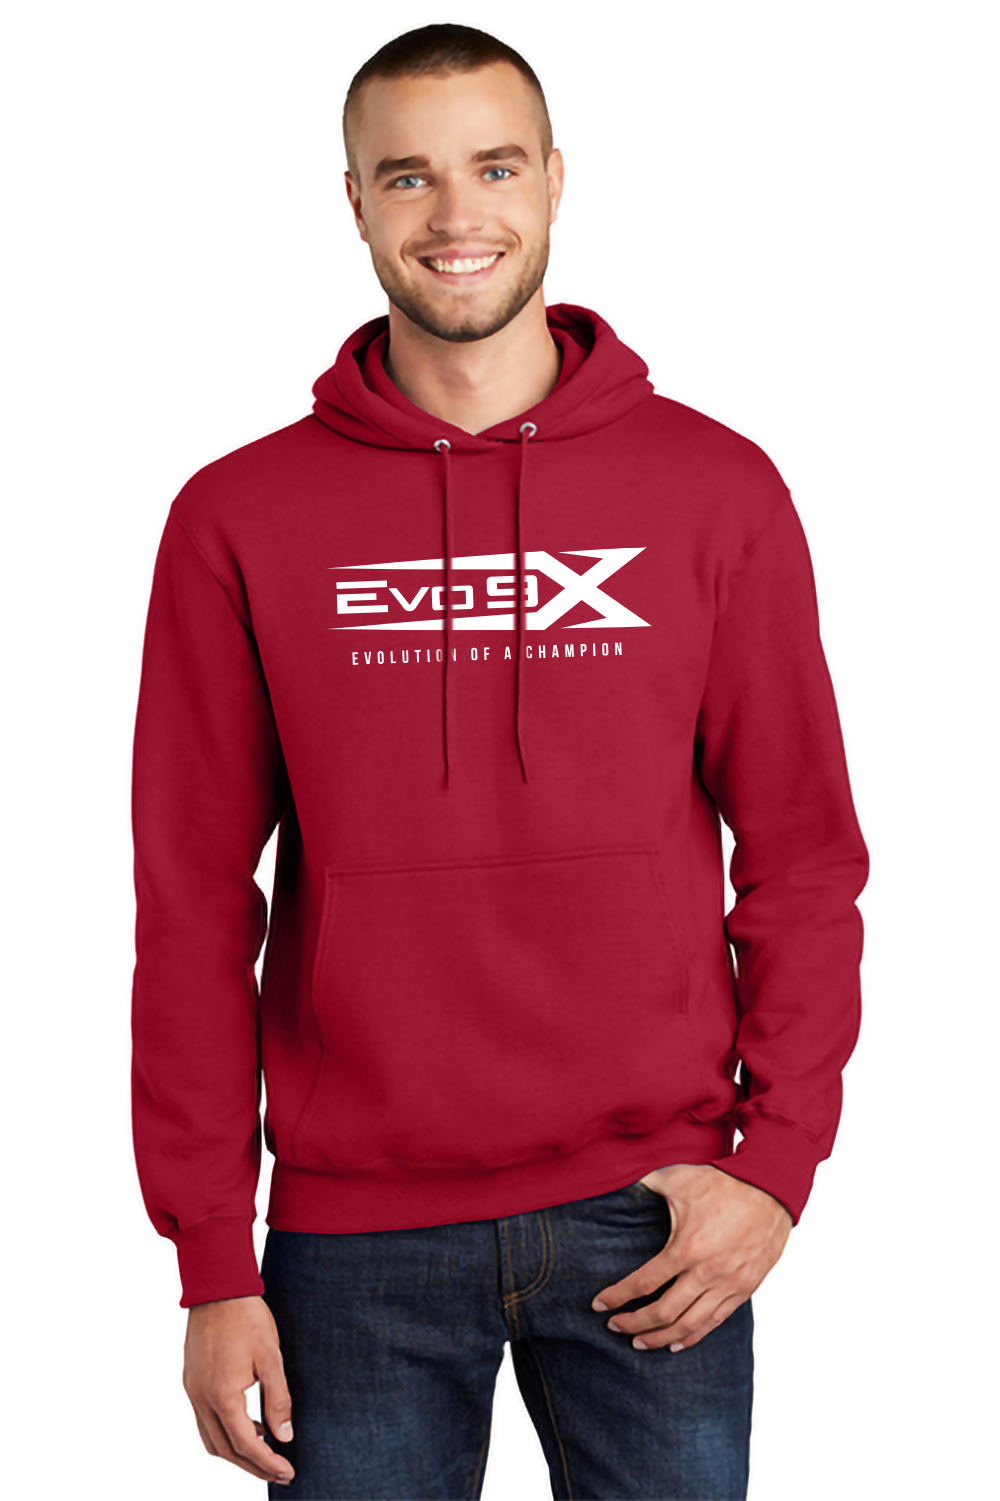 Evolution of the Goat Big Evo9x Logo Hoodie